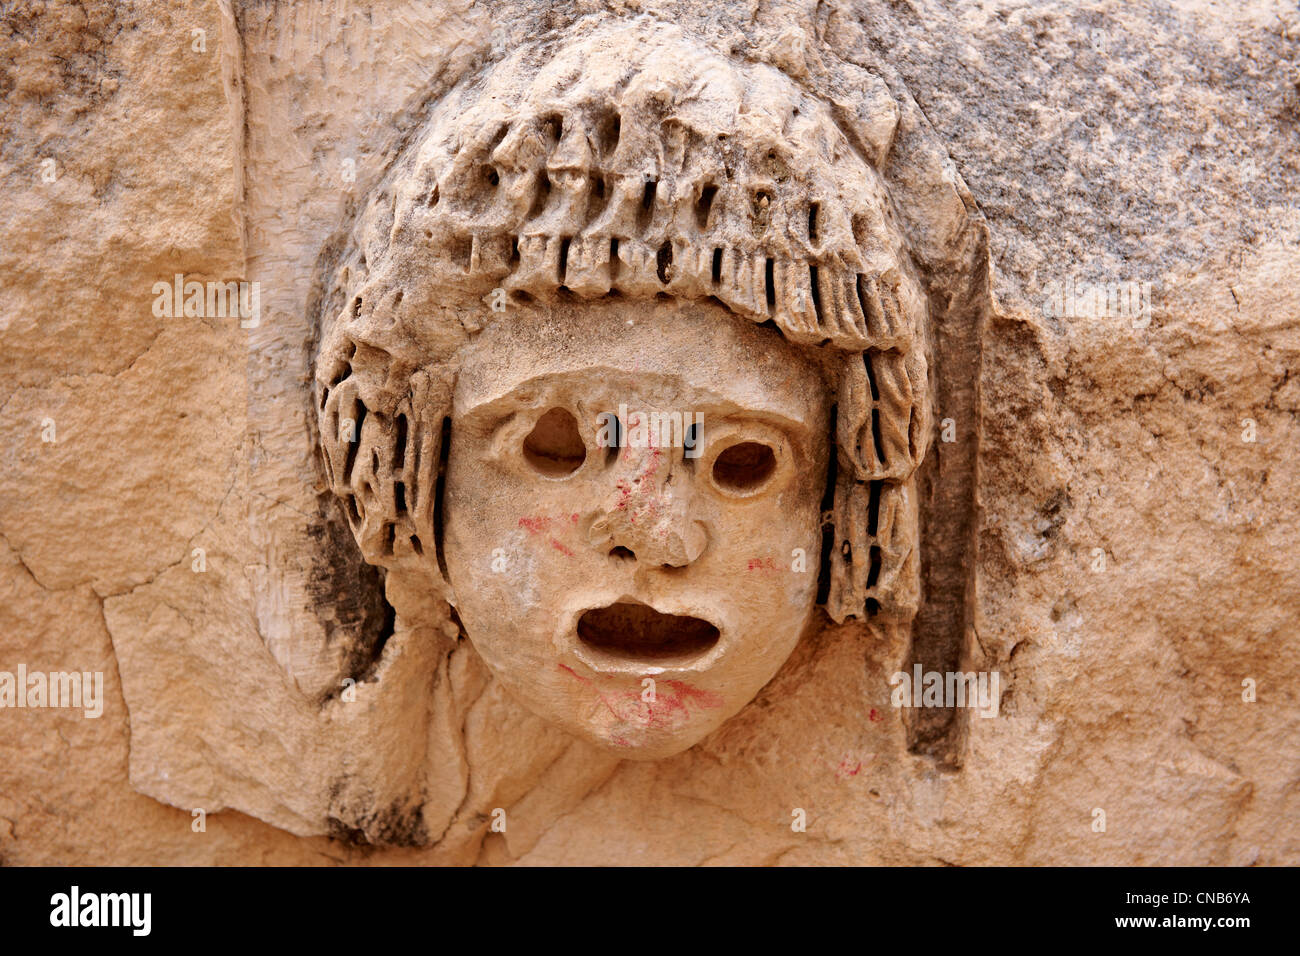 Relief sculpture freeze from the Roman theatre of Myra, Anatolia, Turkey Stock Photo